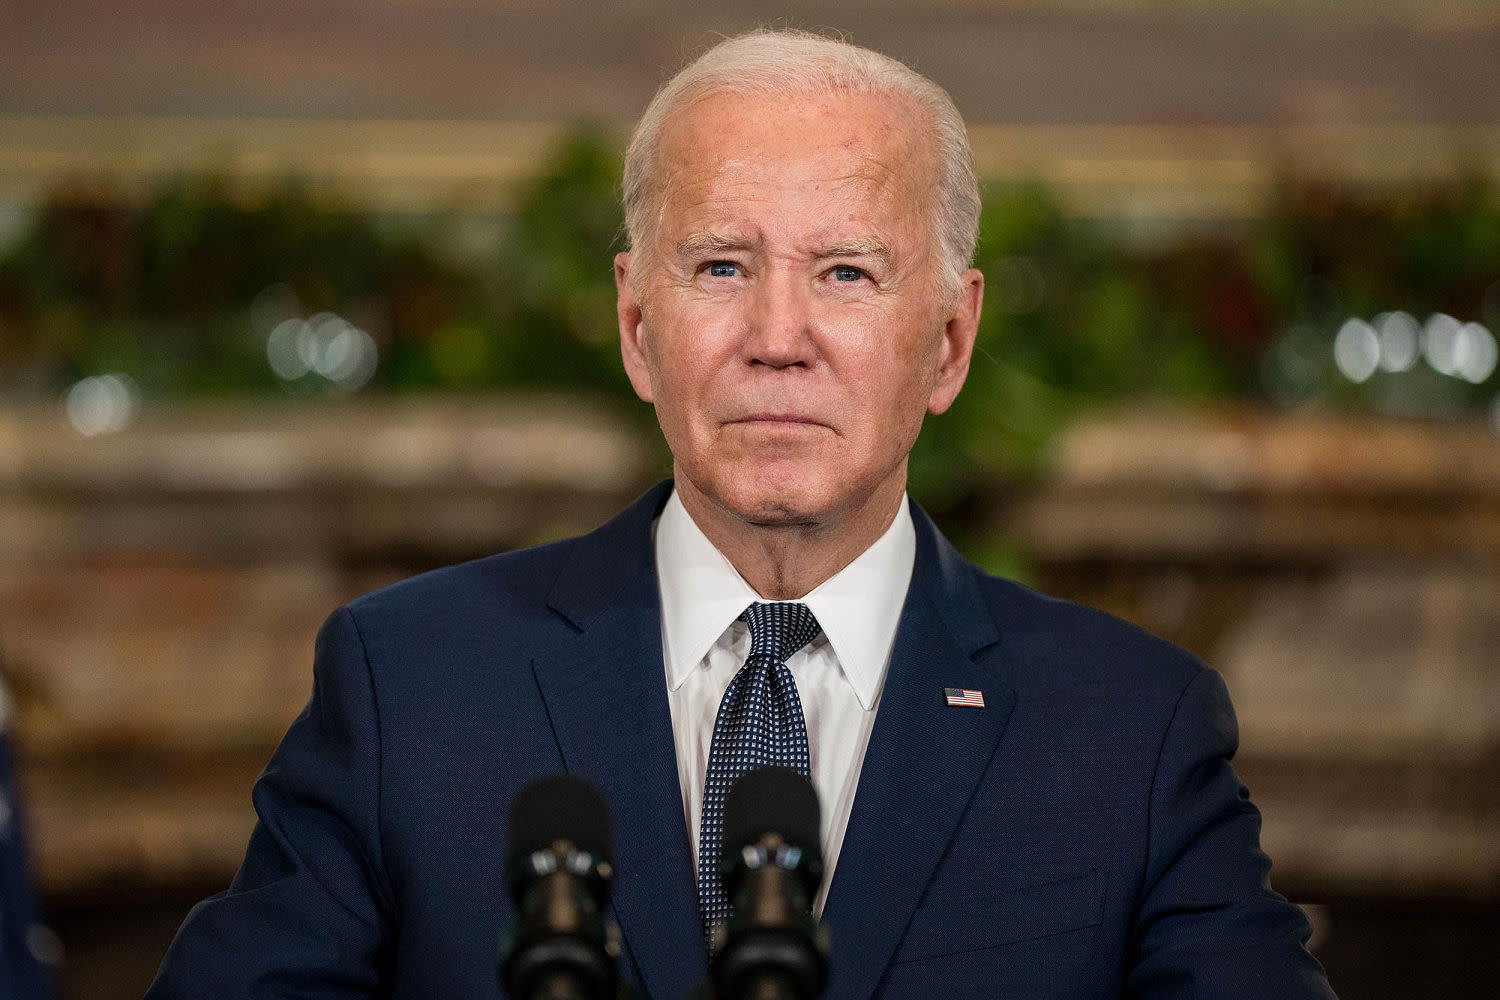 President Joe Biden drops out of 2024 presidential race, endorses VP Kamala Harris